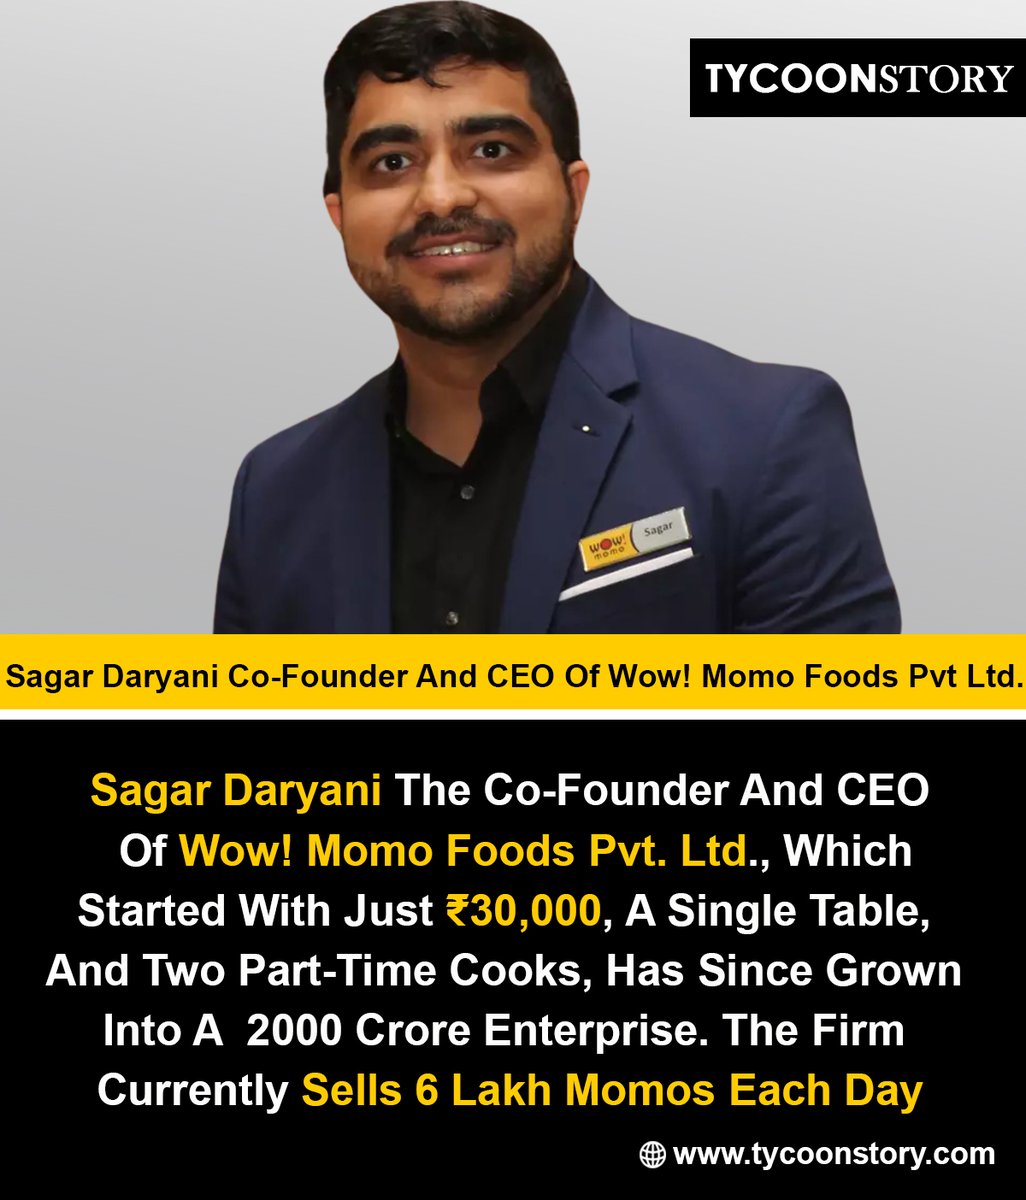 Sagar Daryani Co-Founder And CEO Of Wow! Momo Foods Pvt Ltd.

#SagarDaryani #WowMomo #WowMomoCEO #FoodEntrepreneur #FoodBusiness #StartupFounder #Food #Innovation #FoodTech #StreetFood #FoodIndustry #BusinessSuccess  @Wowmomo4u  @sagar_daryani 

tycoonstory.com